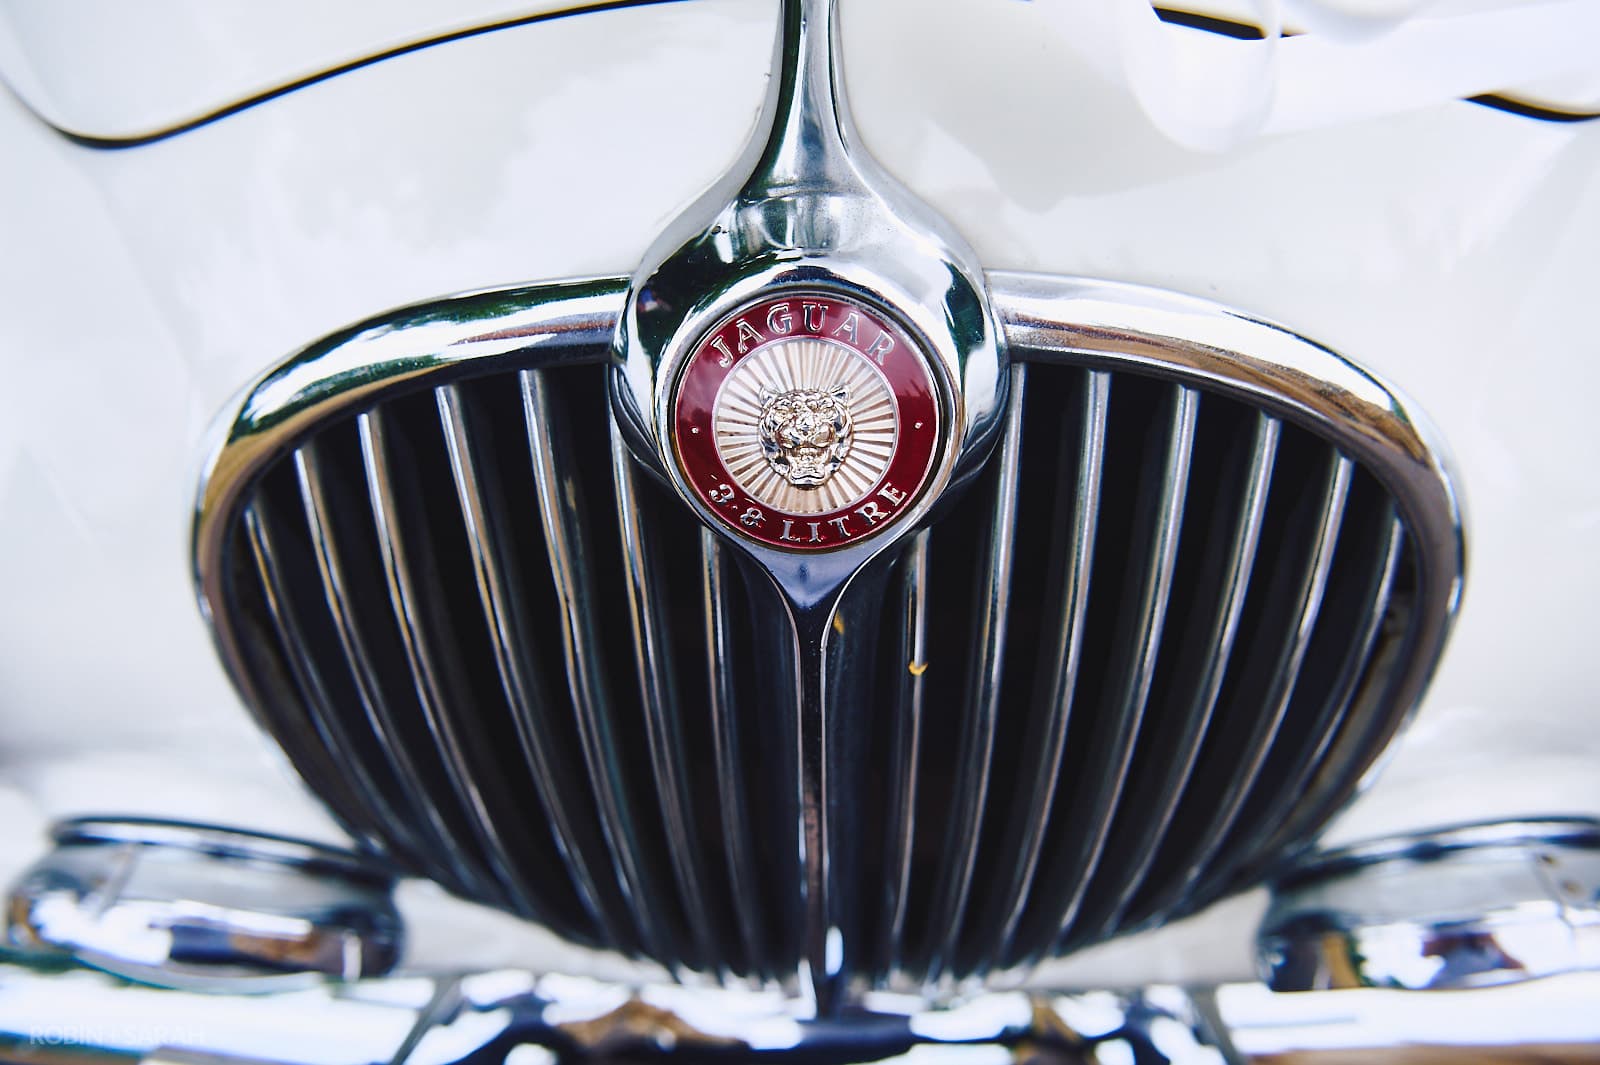 Detail of old Jaguar car